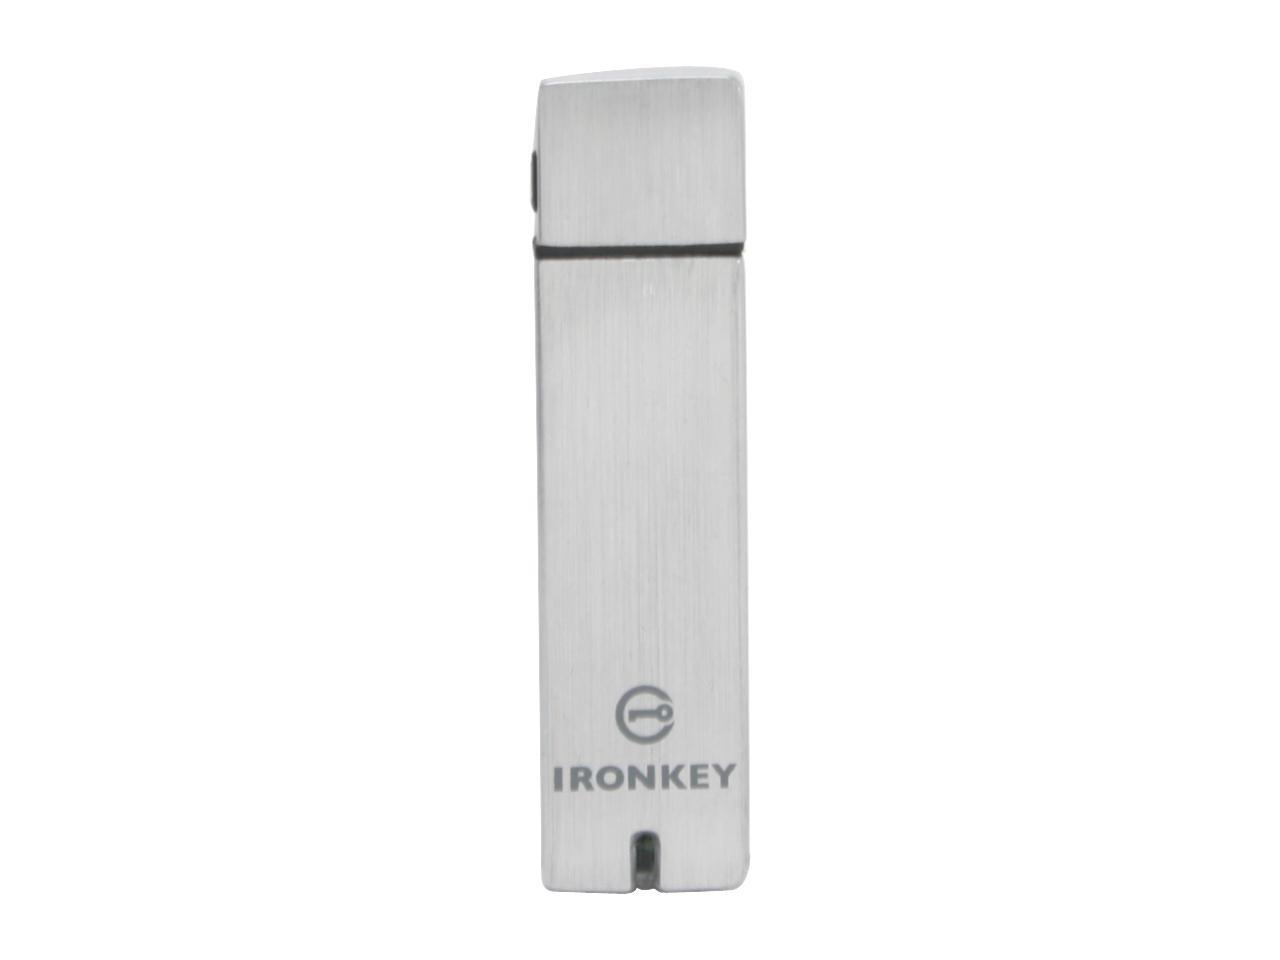 ironkey usb flash drive